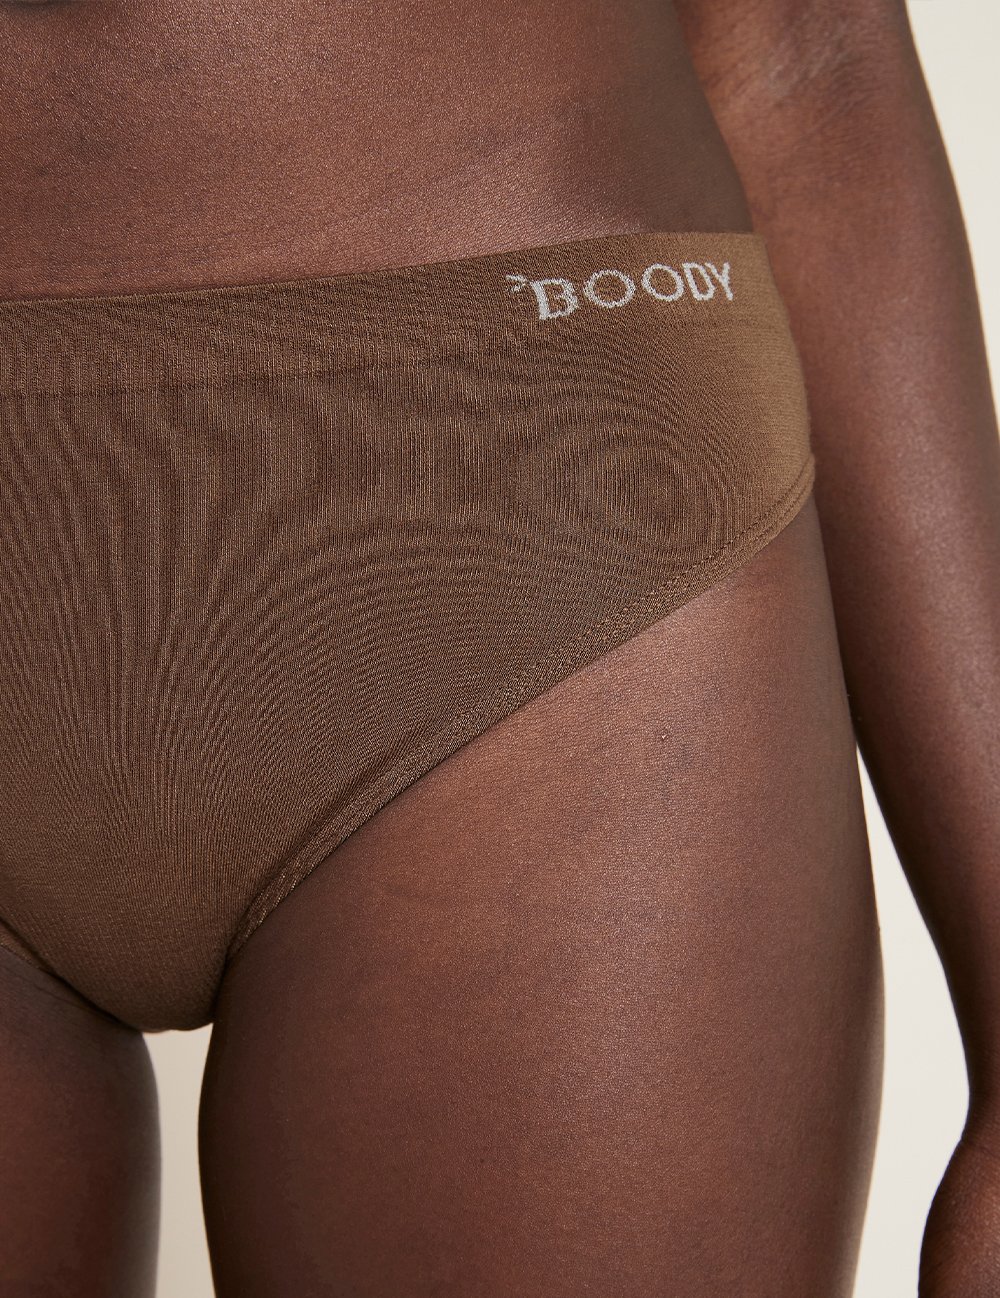 Women's Full Briefs Underwear, Nude, Boody Bamboo Eco Wear, Organic -  Ekotrade Nordic - Green Shopping